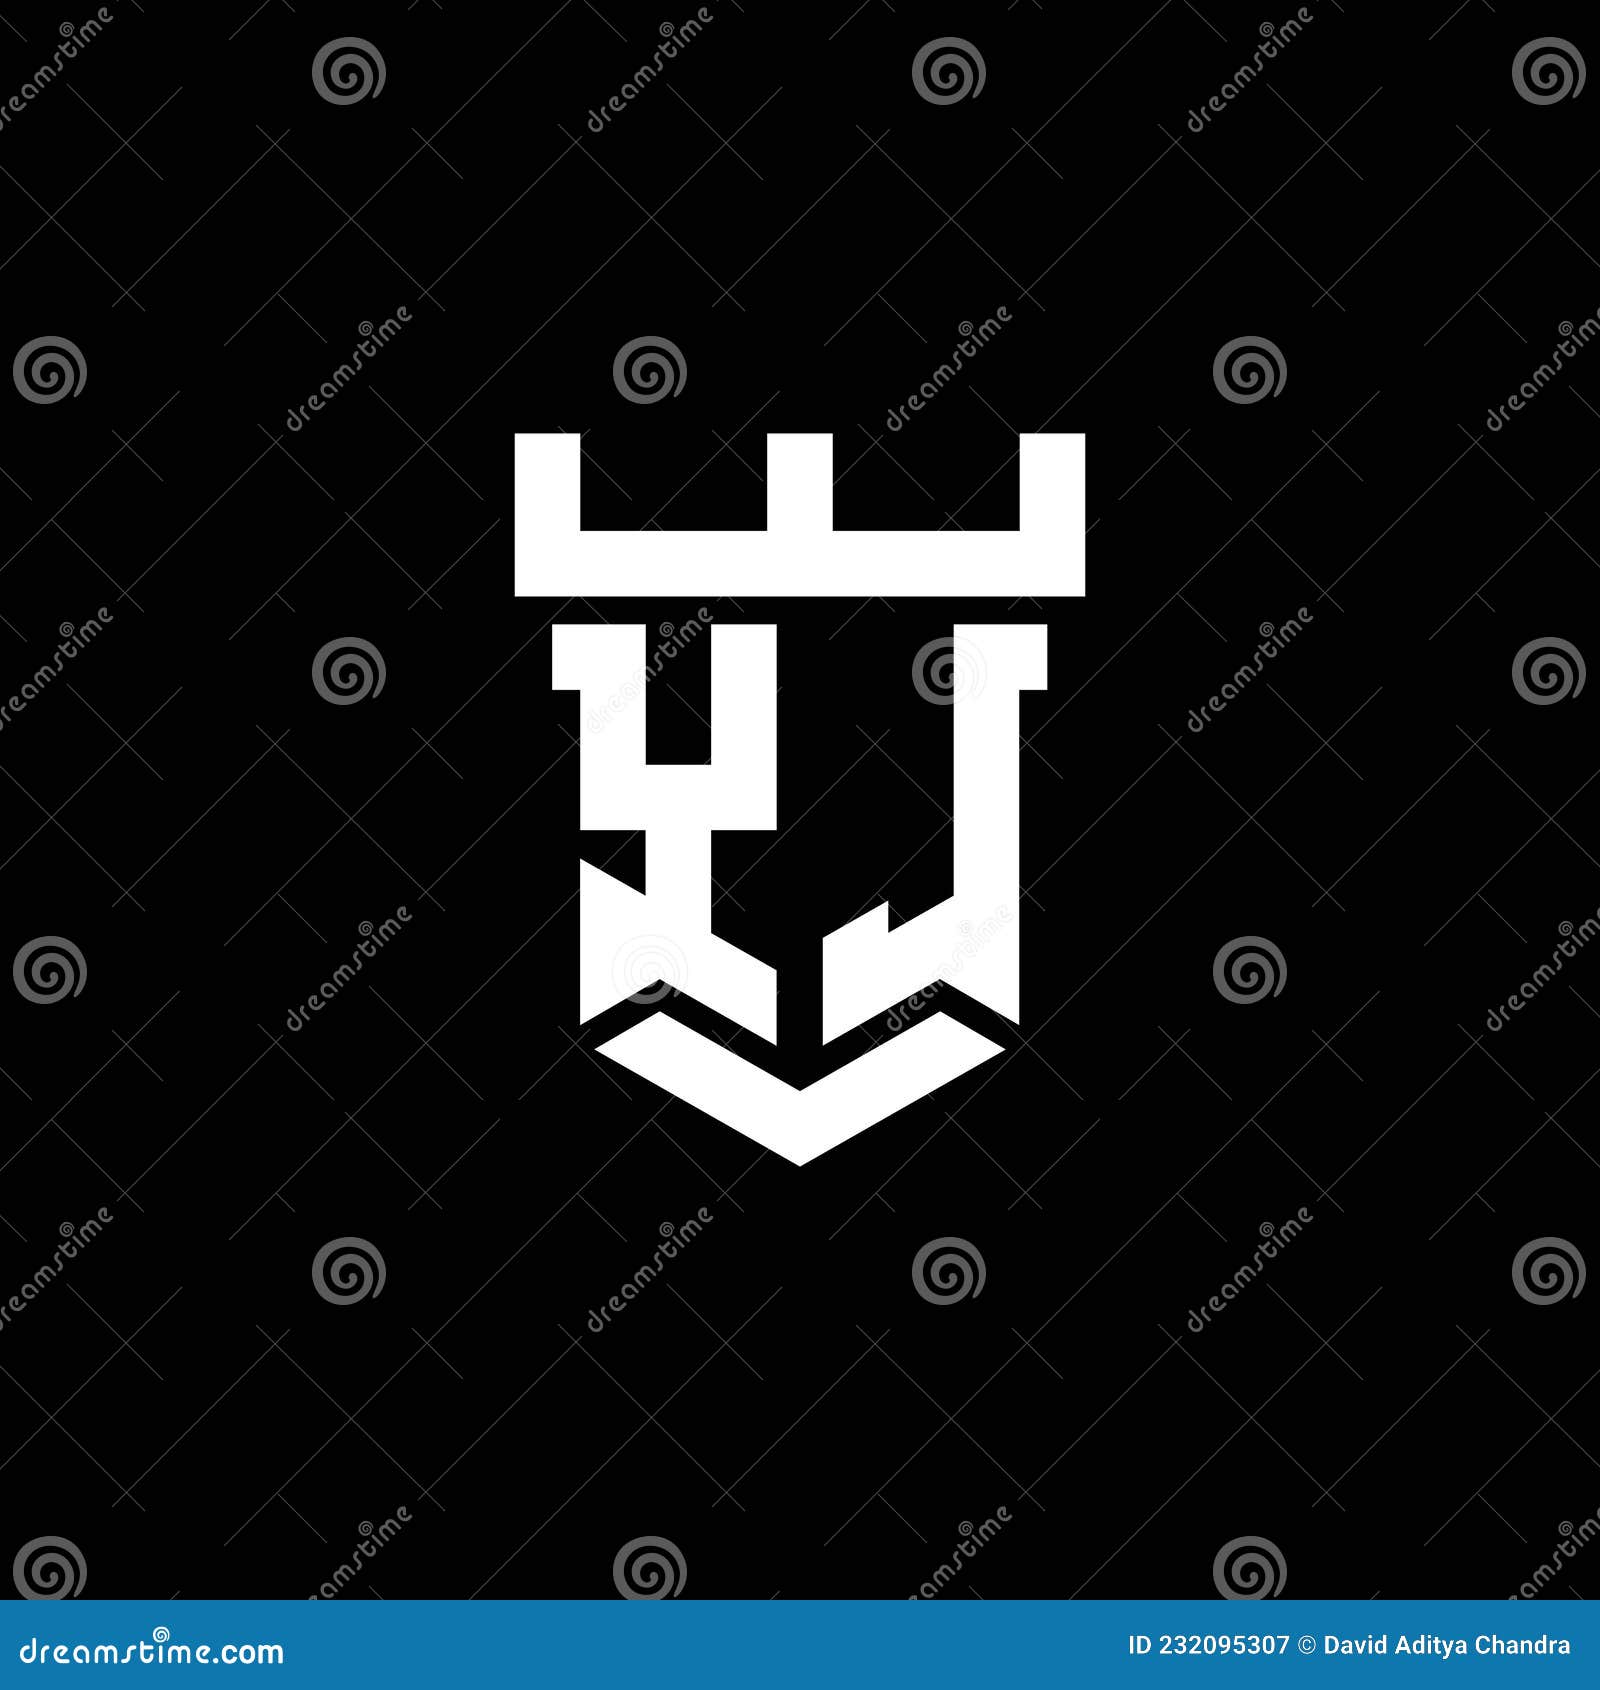 YL monogram logo by santuy_dsgn on Dribbble